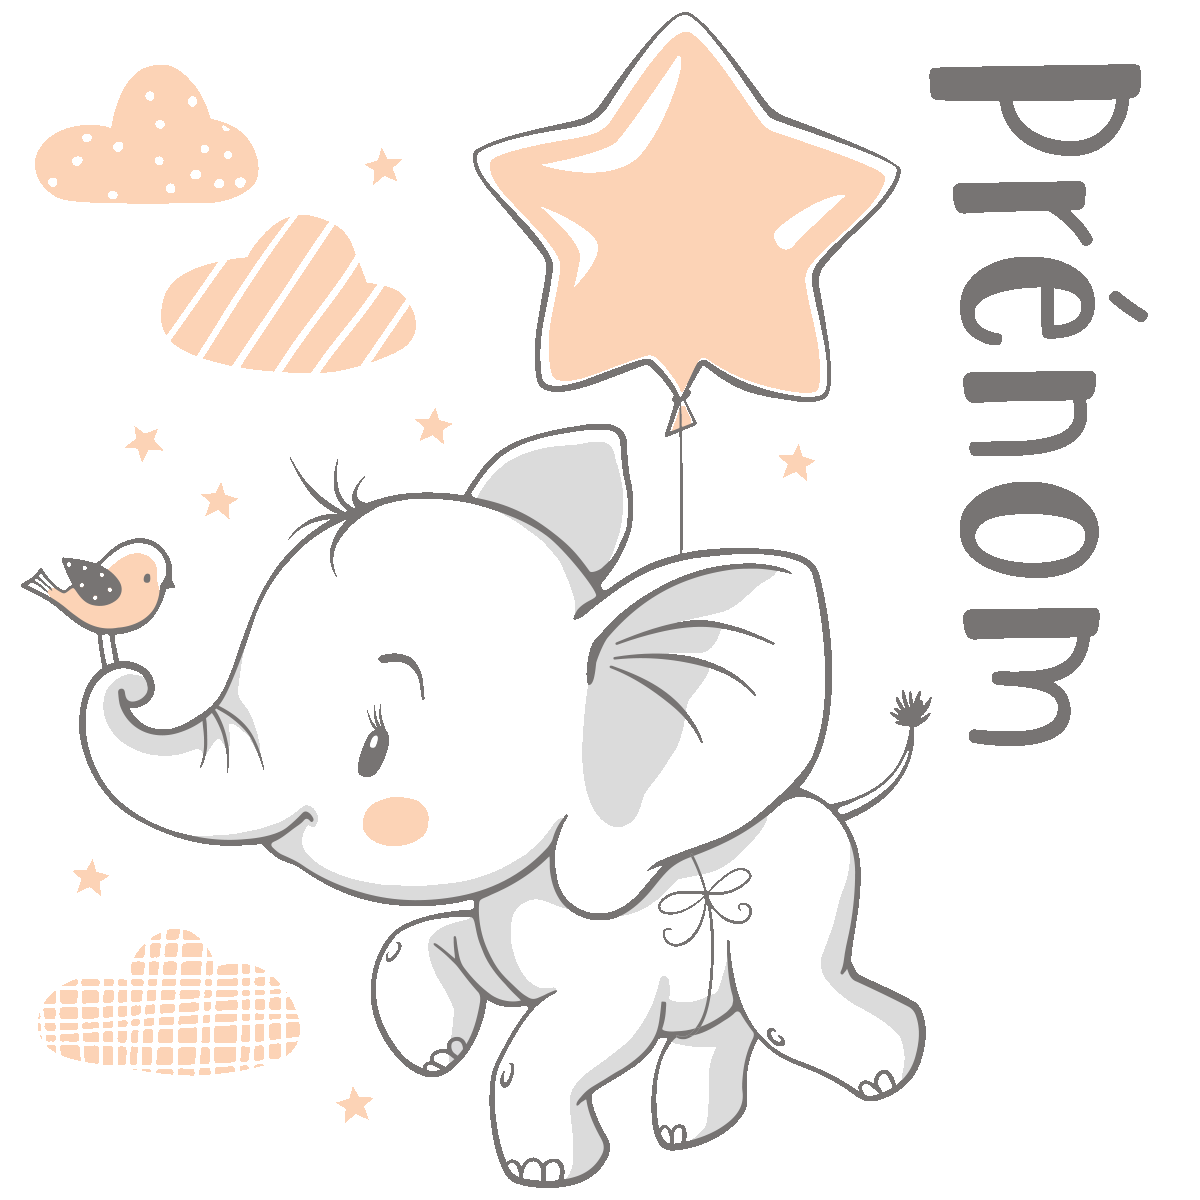 Sticker Prenom Personnalise Bebe Elephant Reveur Stickers Idees Cadeaux Prenoms Enfants Ambiance Sticker